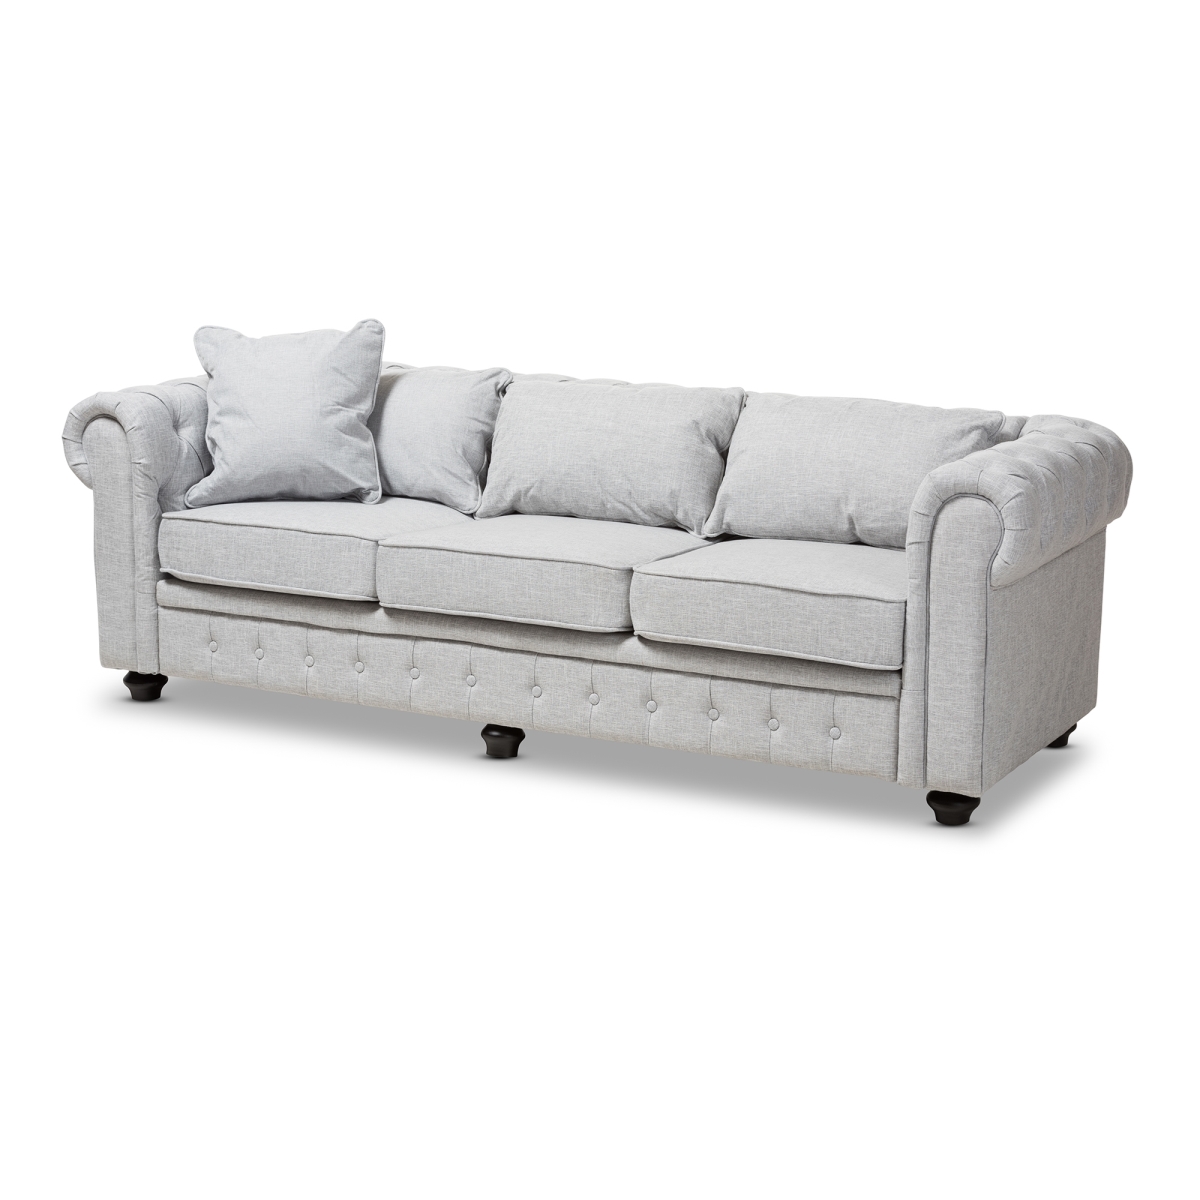 Rx1616-gray-sf Alaise Modern Classic Chesterfield Sofa, Grey